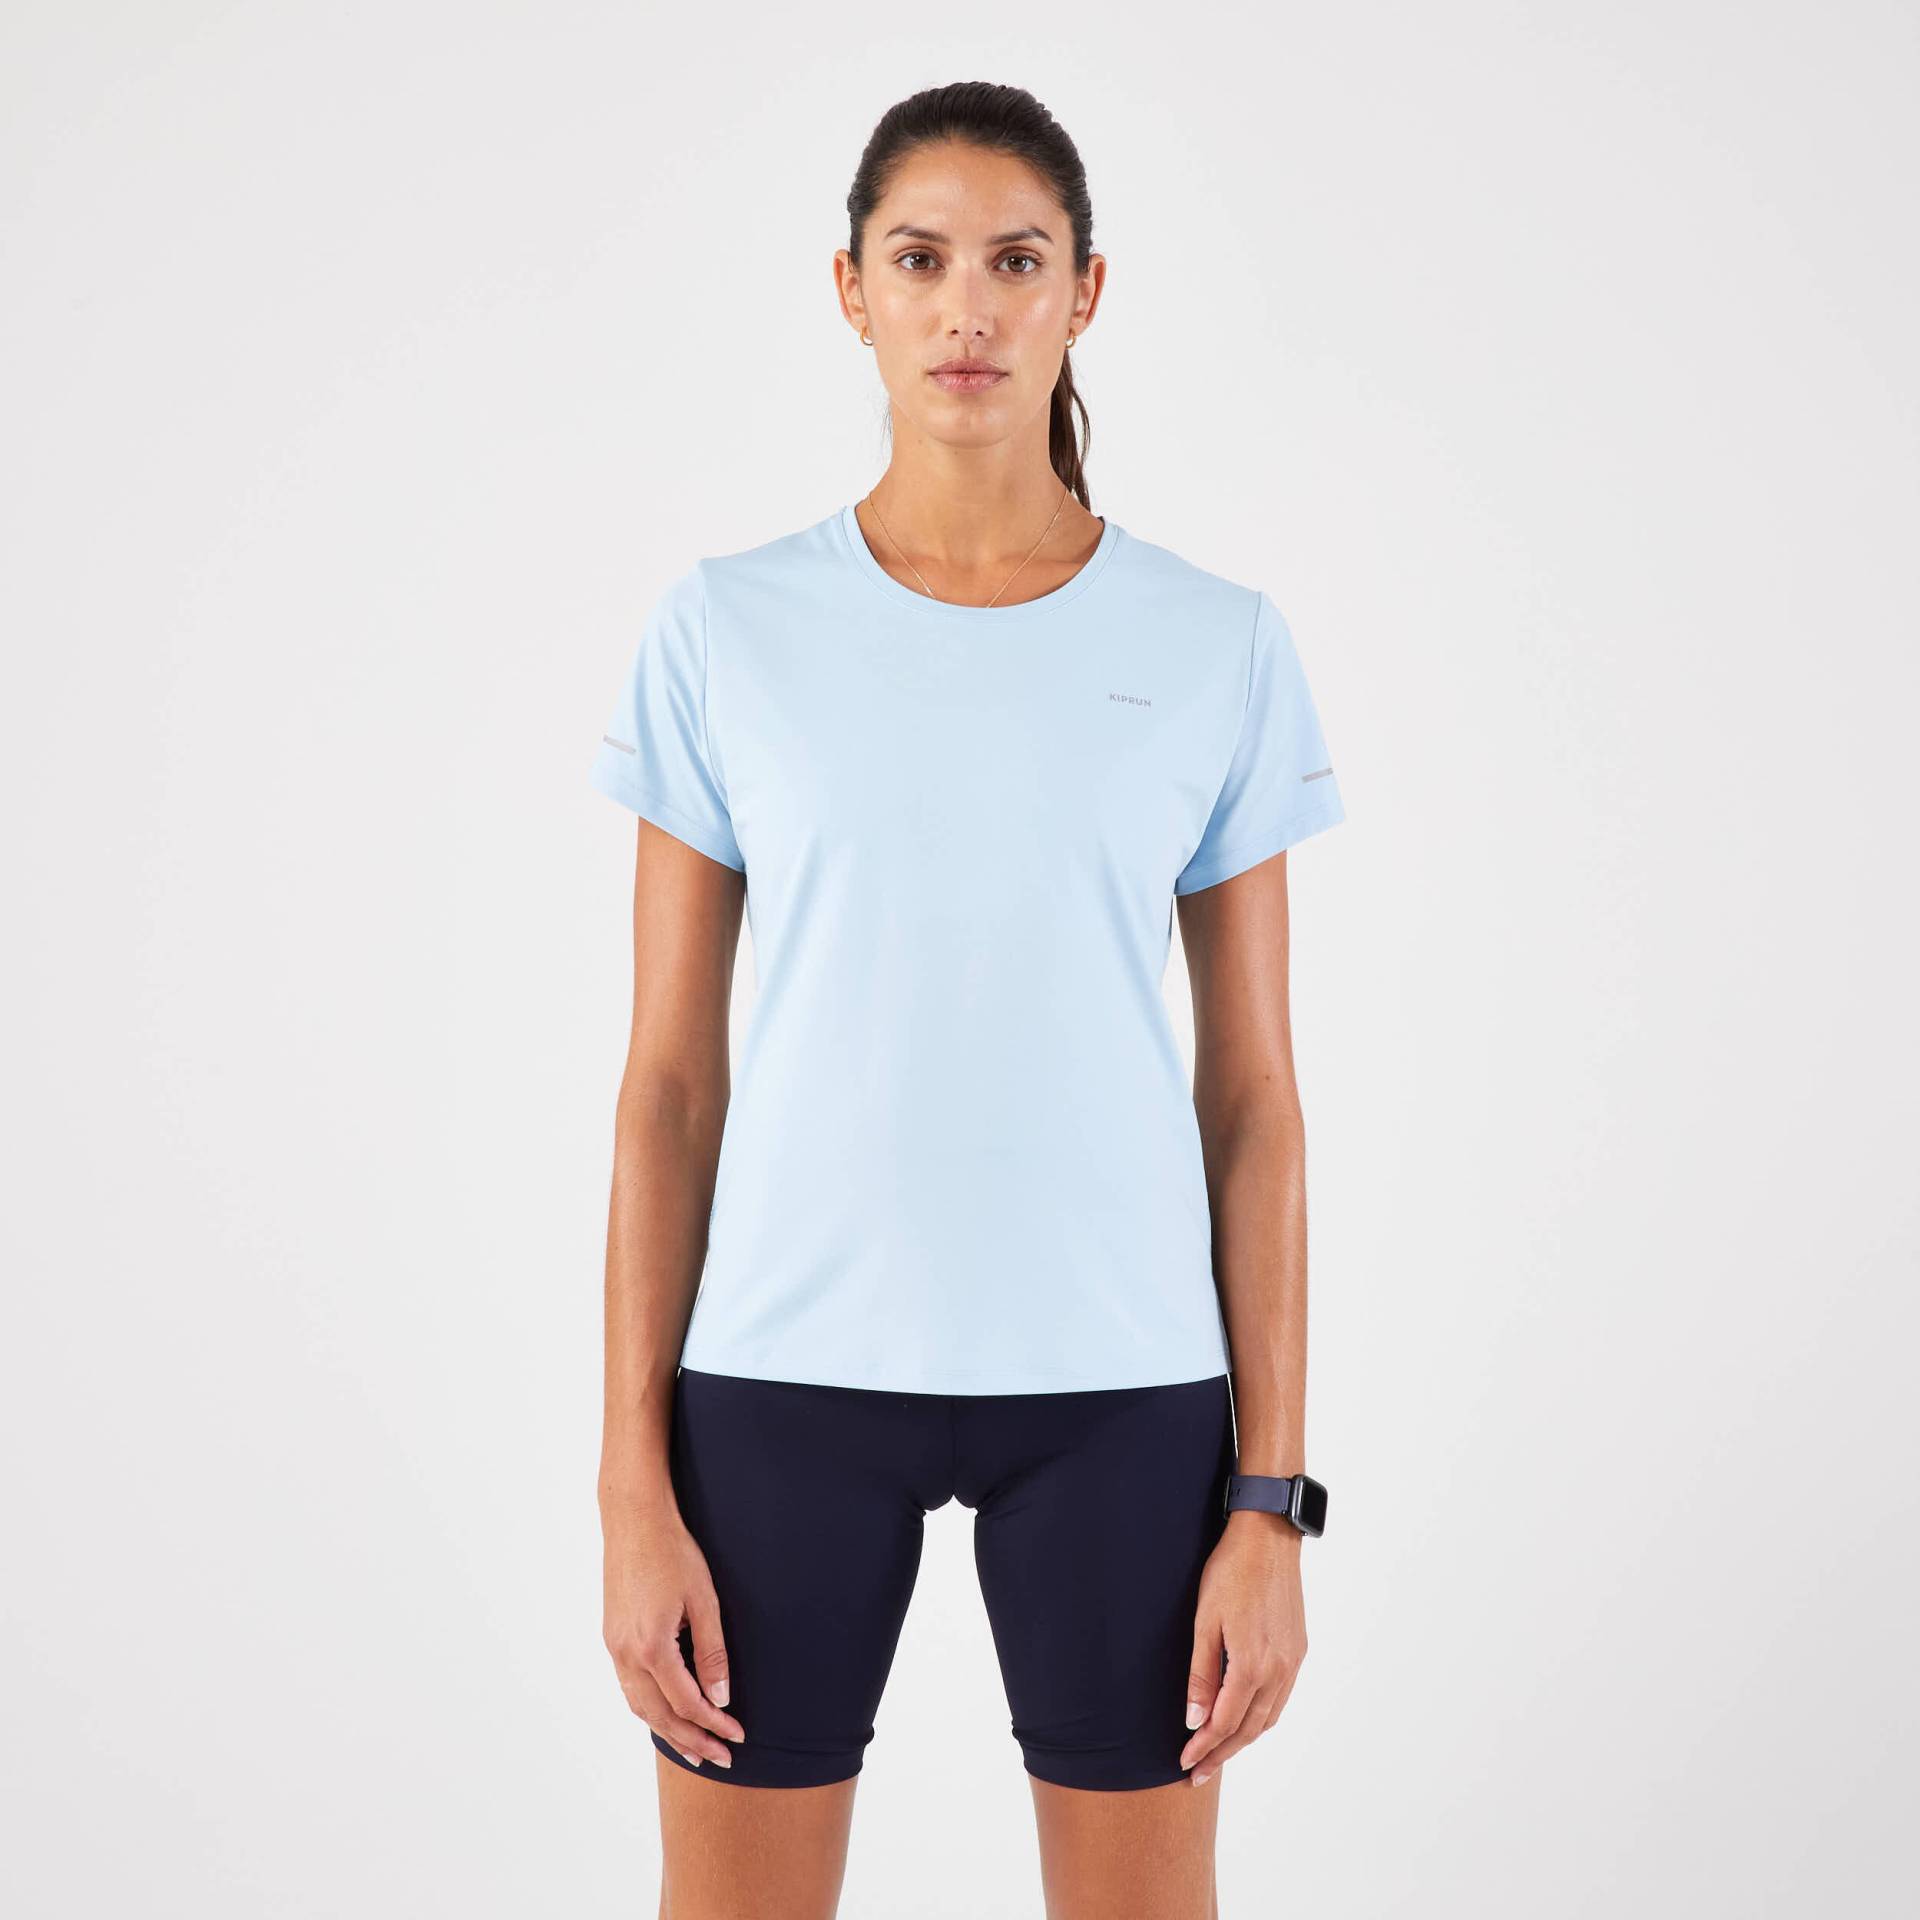 Laufshirt kurzarm Damen atmungsaktiv - Run 500 Dry hellblau von Kiprun